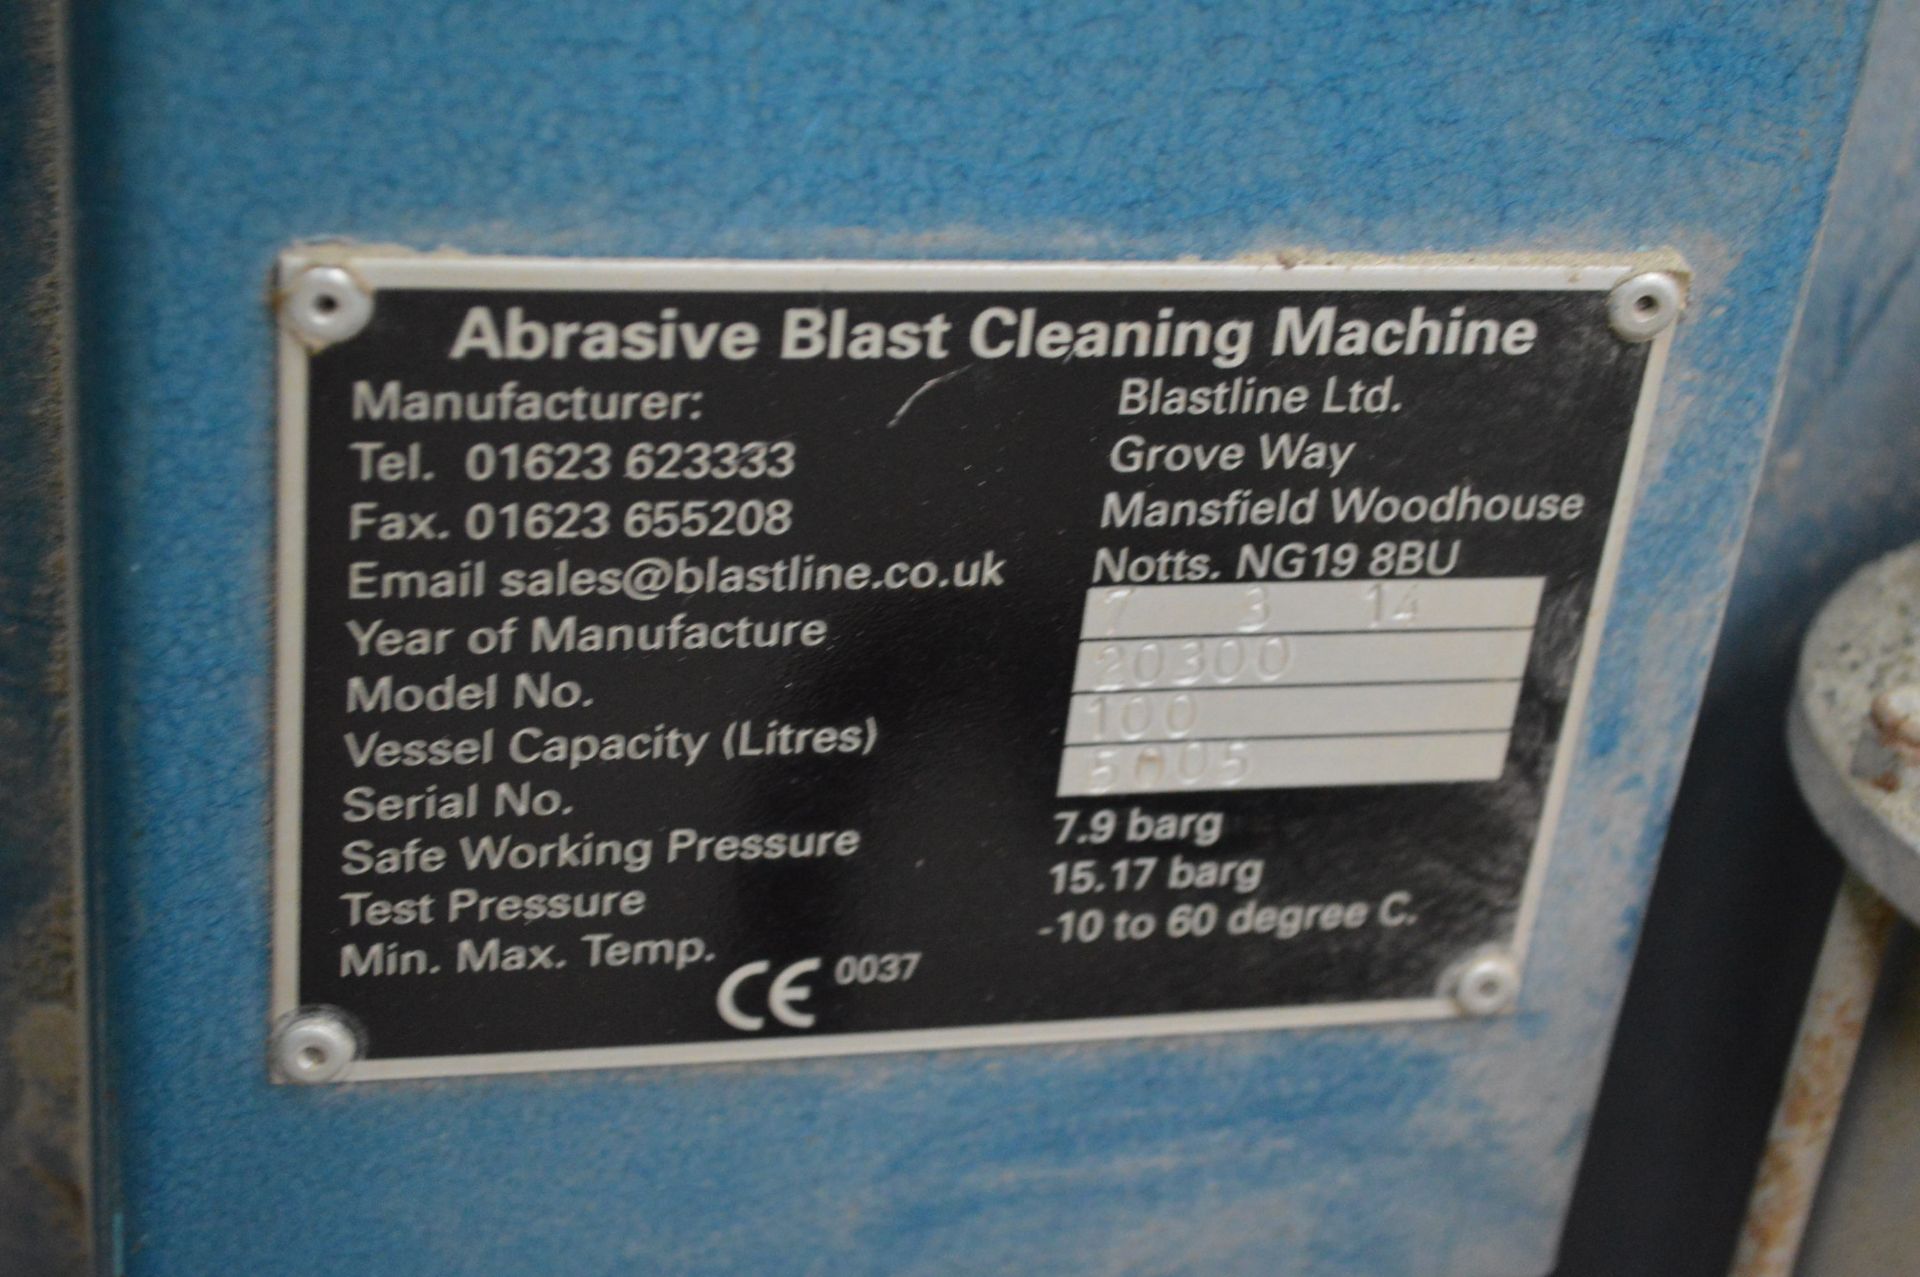 Blastline 20300 Abrasive Blast Cleaning Machine, s - Image 3 of 3